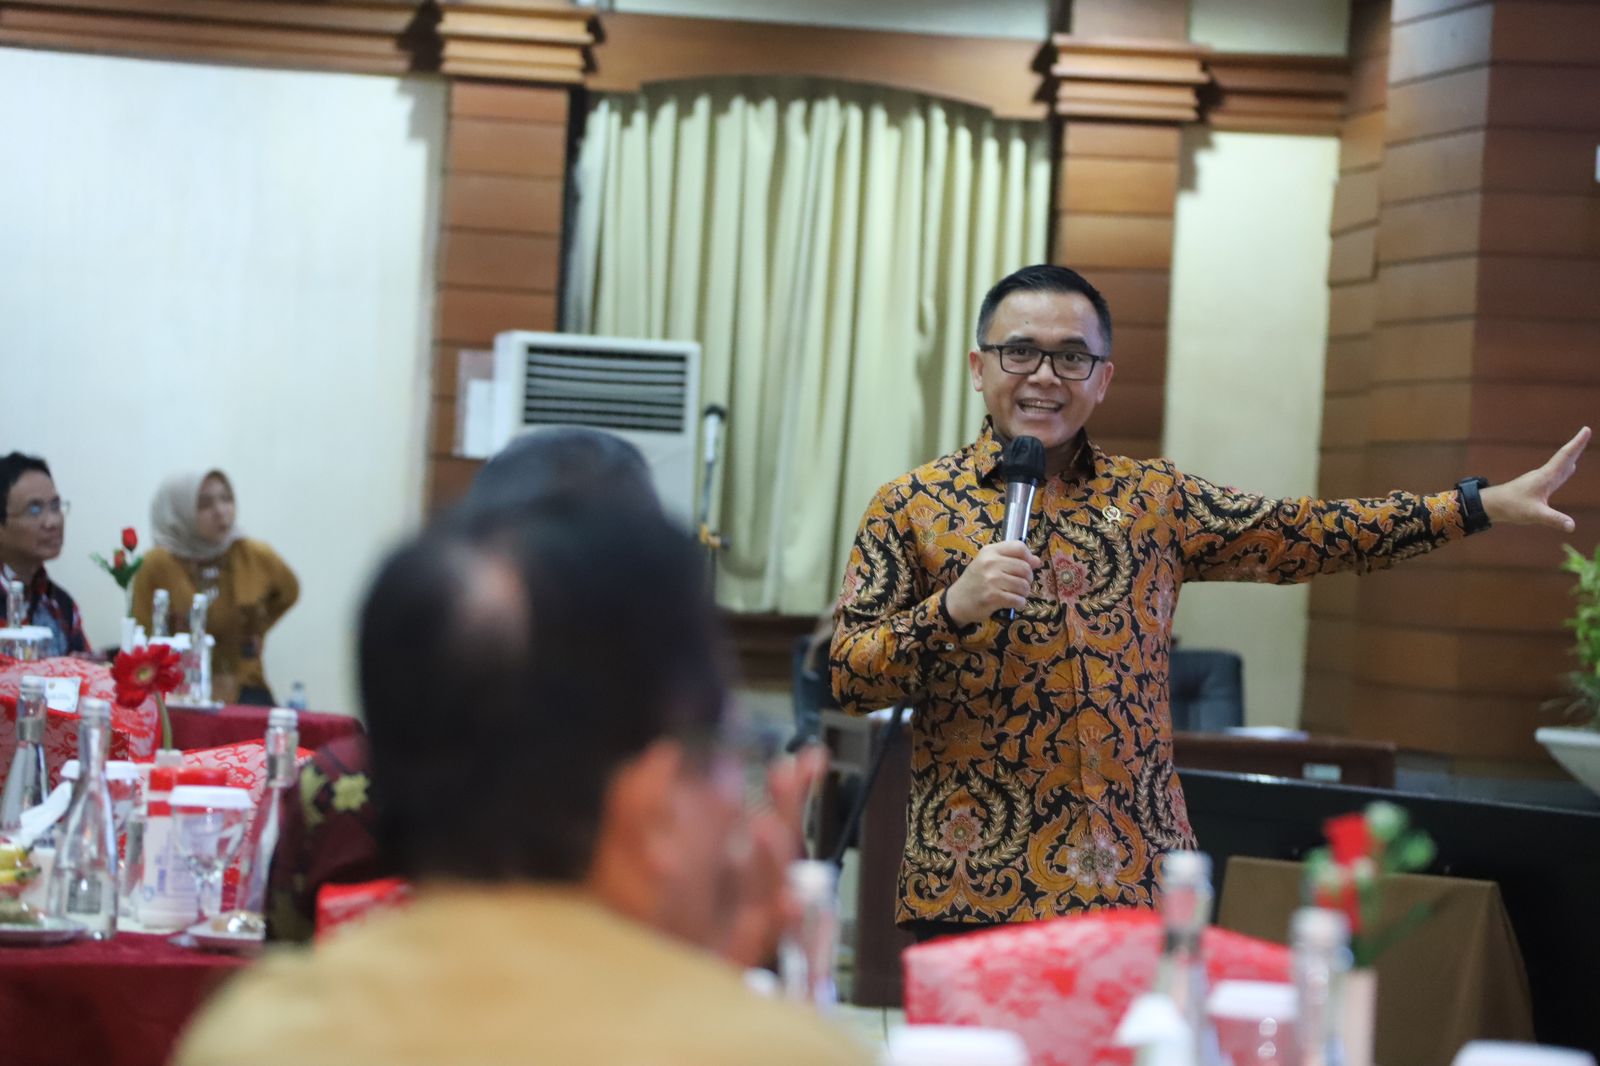 Menteri PANRB Ajak ASN Kota Semarang Wujudkan Birokrasi Berdampak